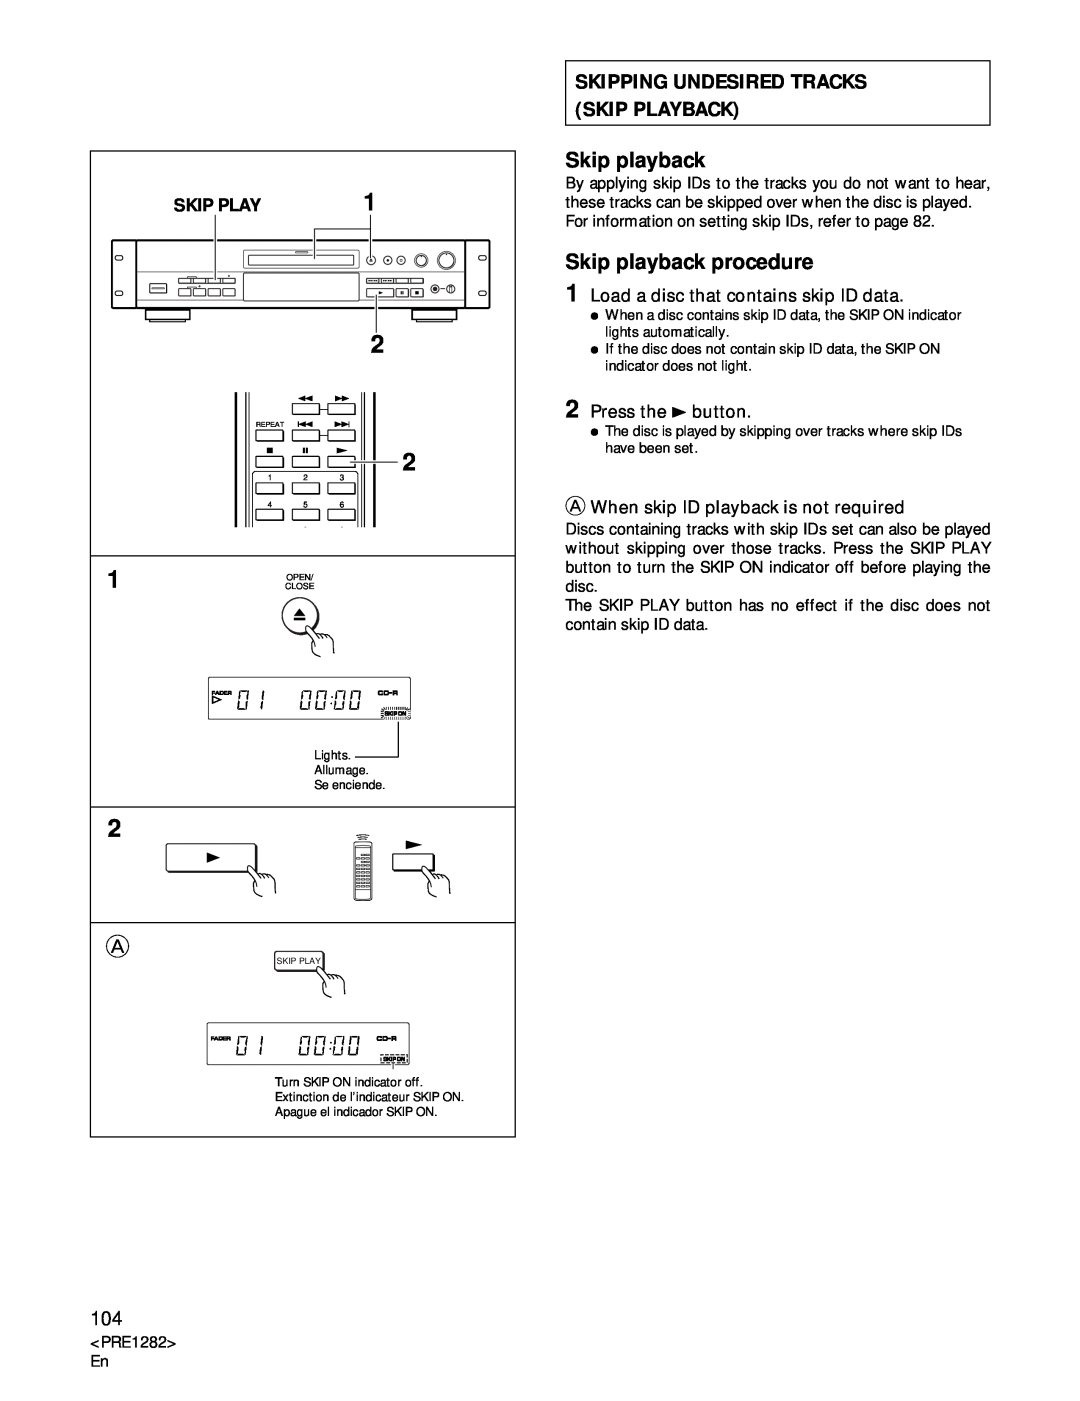 Americana Appliances CDR-850 manual Skipping Undesired Tracks Skip Playback, Skip playback procedure 